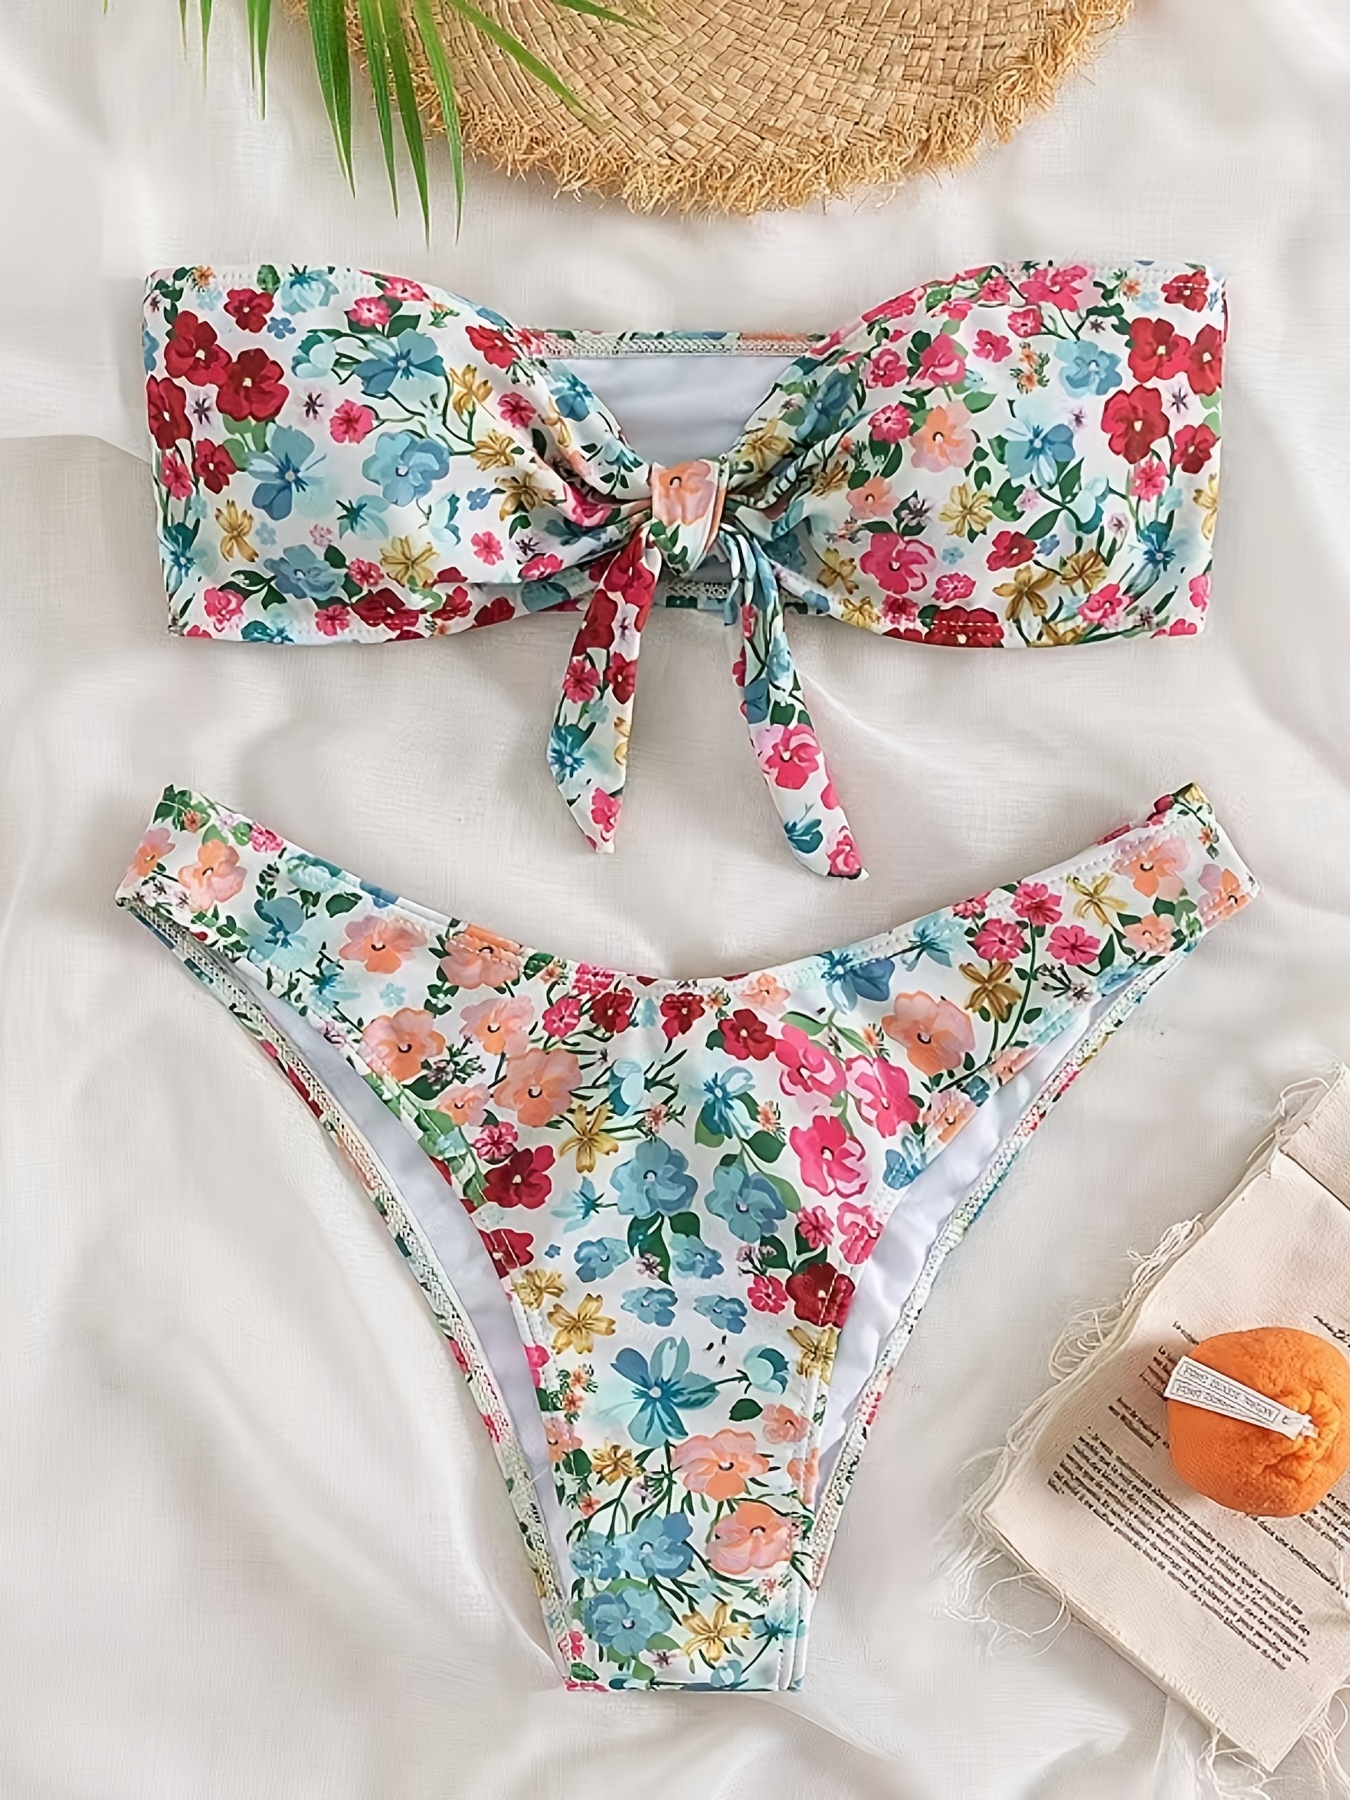 SET] BNWT H&M hnm sweden floral flower botanical summer bandeau strapless  tube scrunch cheeky bikini set bathing suit swimsuit ladies swimwear size  34 - equal to billabong 6 / ripcurl XS, Women's